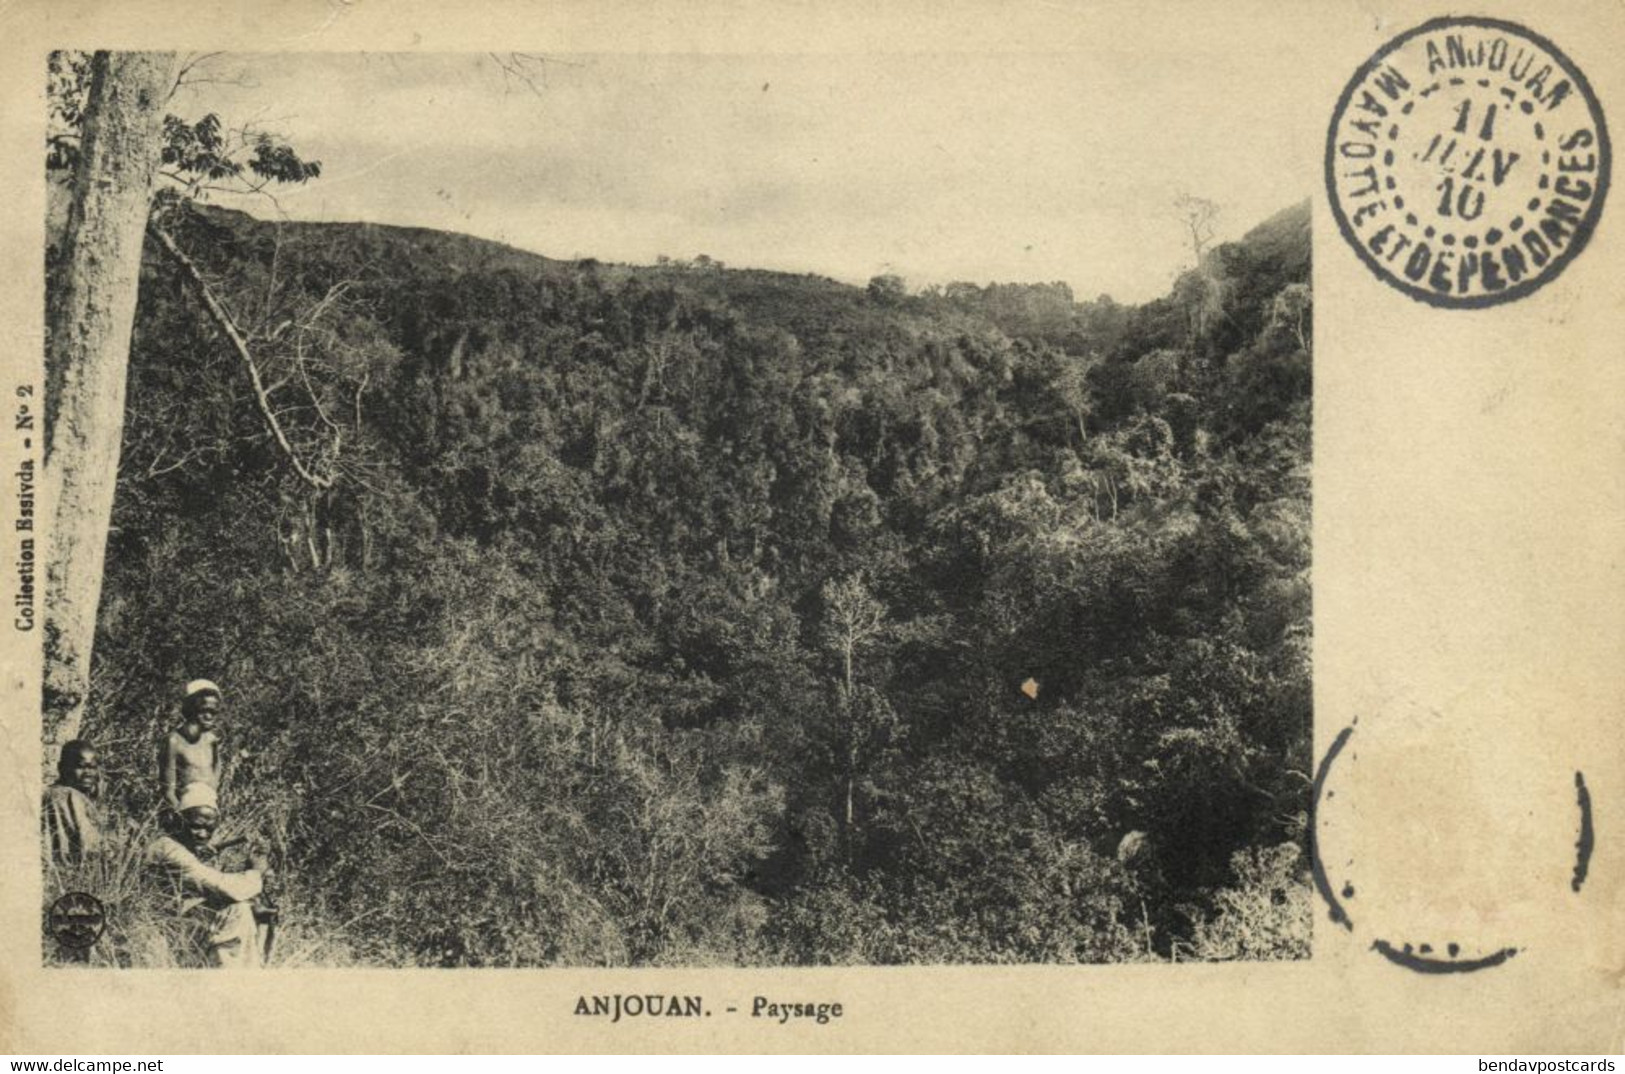 Comoros, ANJOUAN, Paysage, Landscape (1910) Postcard (1) - Comores